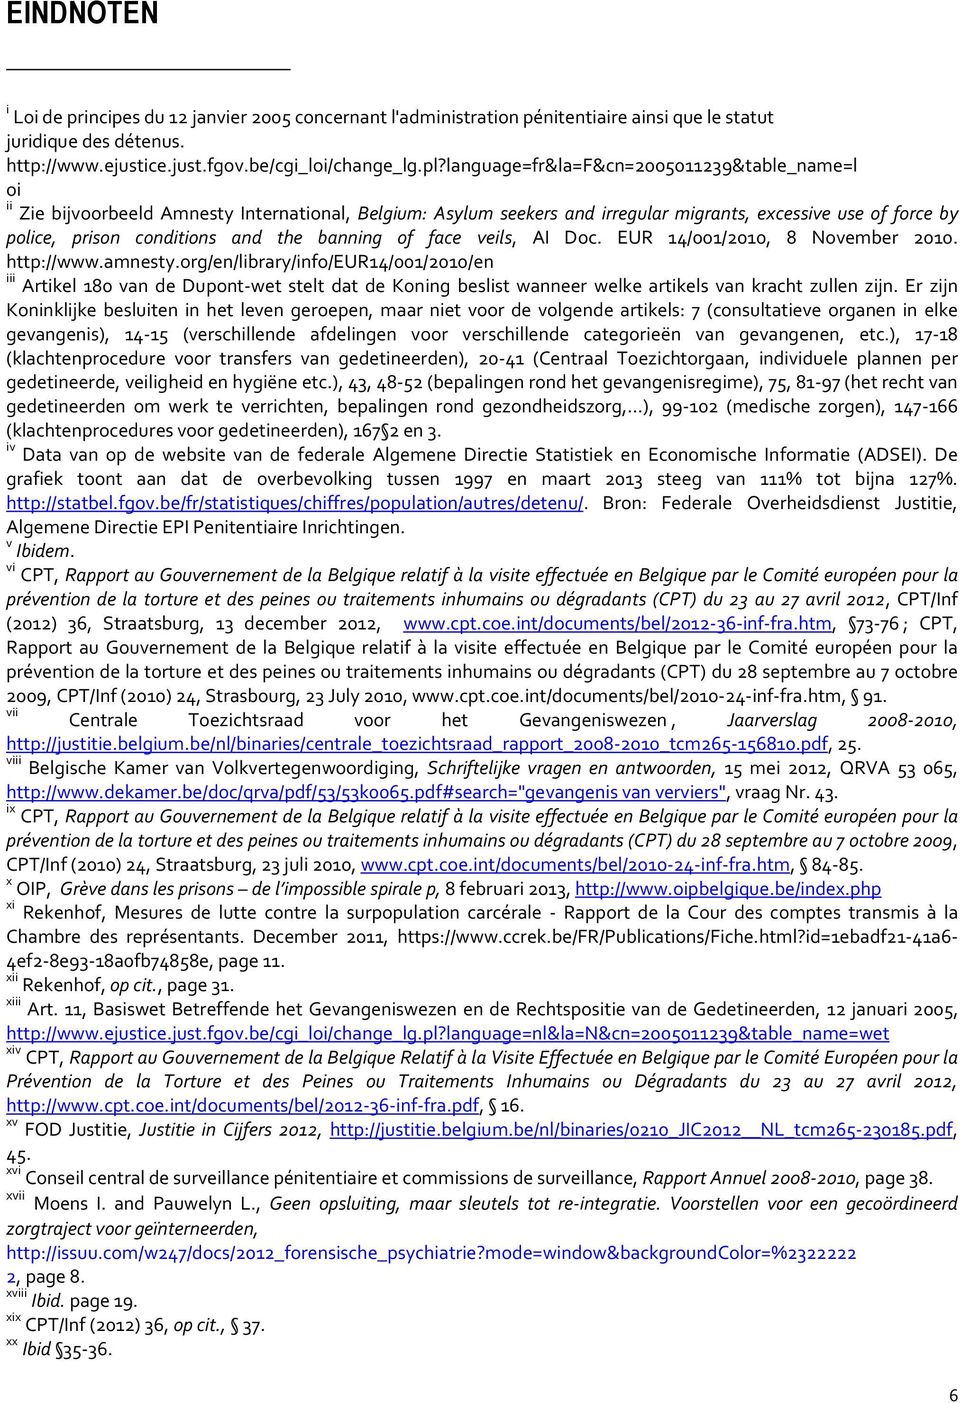 banning of face veils, AI Doc. EUR 14/001/2010, 8 November 2010. http://www.amnesty.